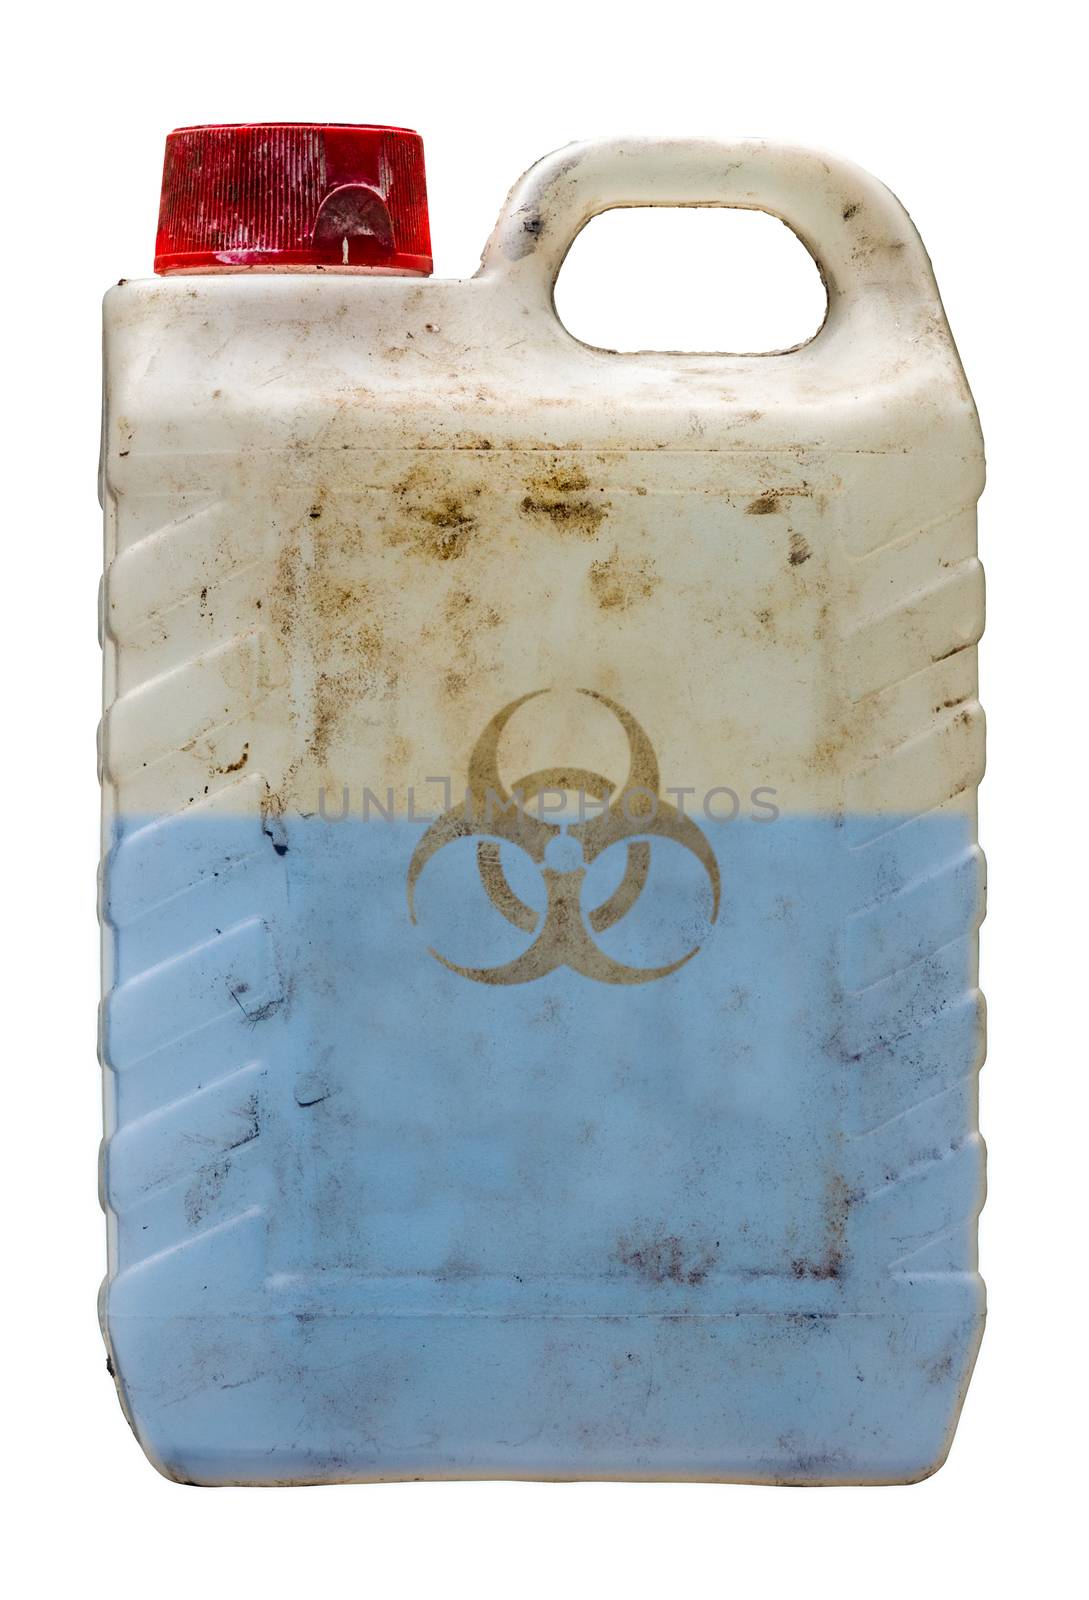 Toxic Biohazard Liquid by mrdoomits